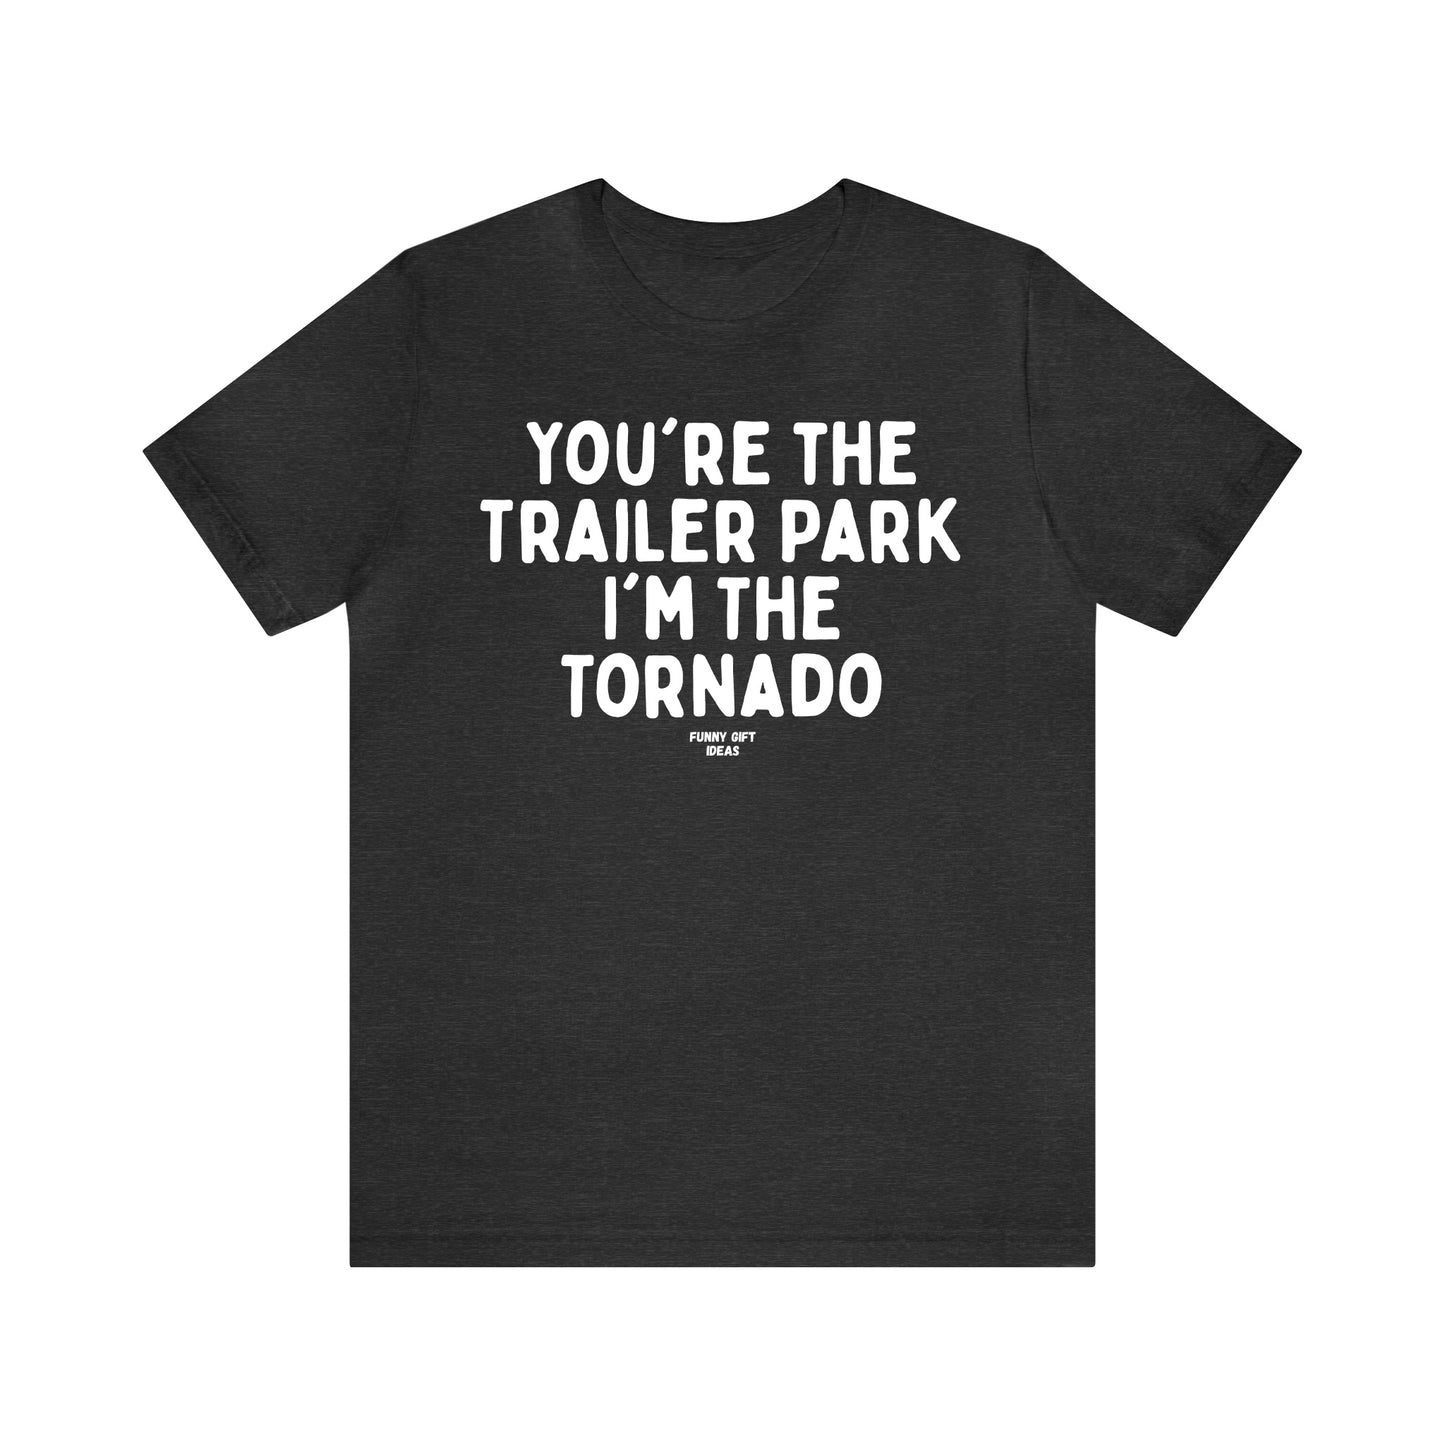 Funny Shirts for Women - You're the Trailer Park I'm the Tornado - Women's T Shirts